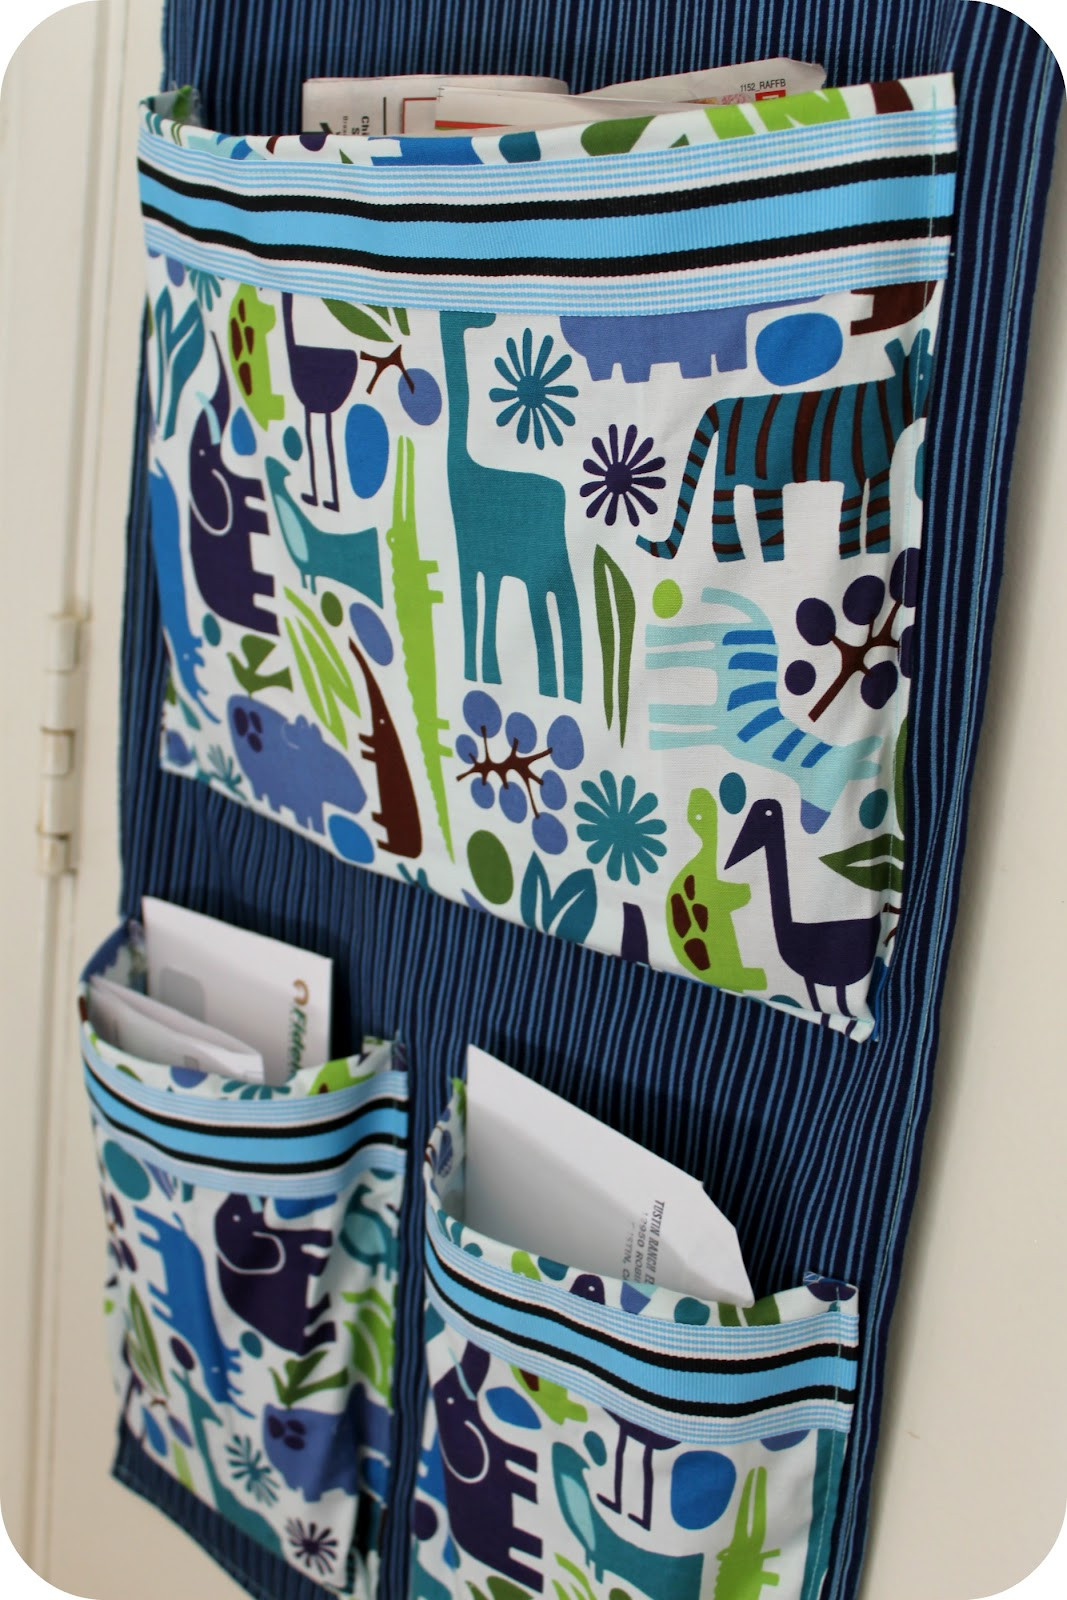 DIY Fabric Organizer
 DiY Project Sew a Fabric Mail Organizer for the Wall